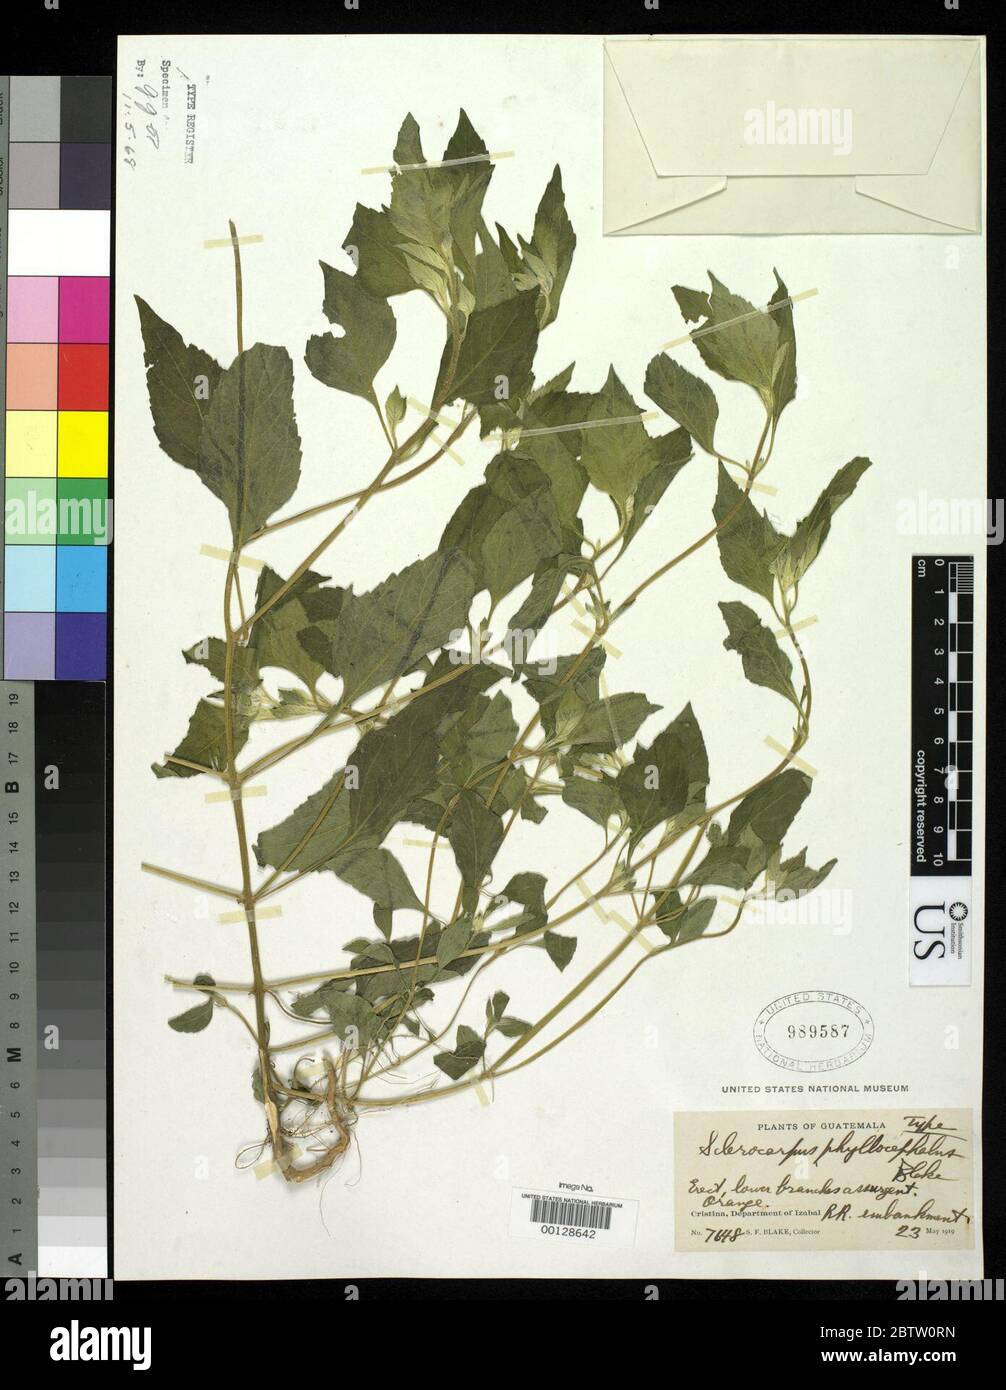 Sclerocarpus phyllocephalus SF Blake. Stock Photo